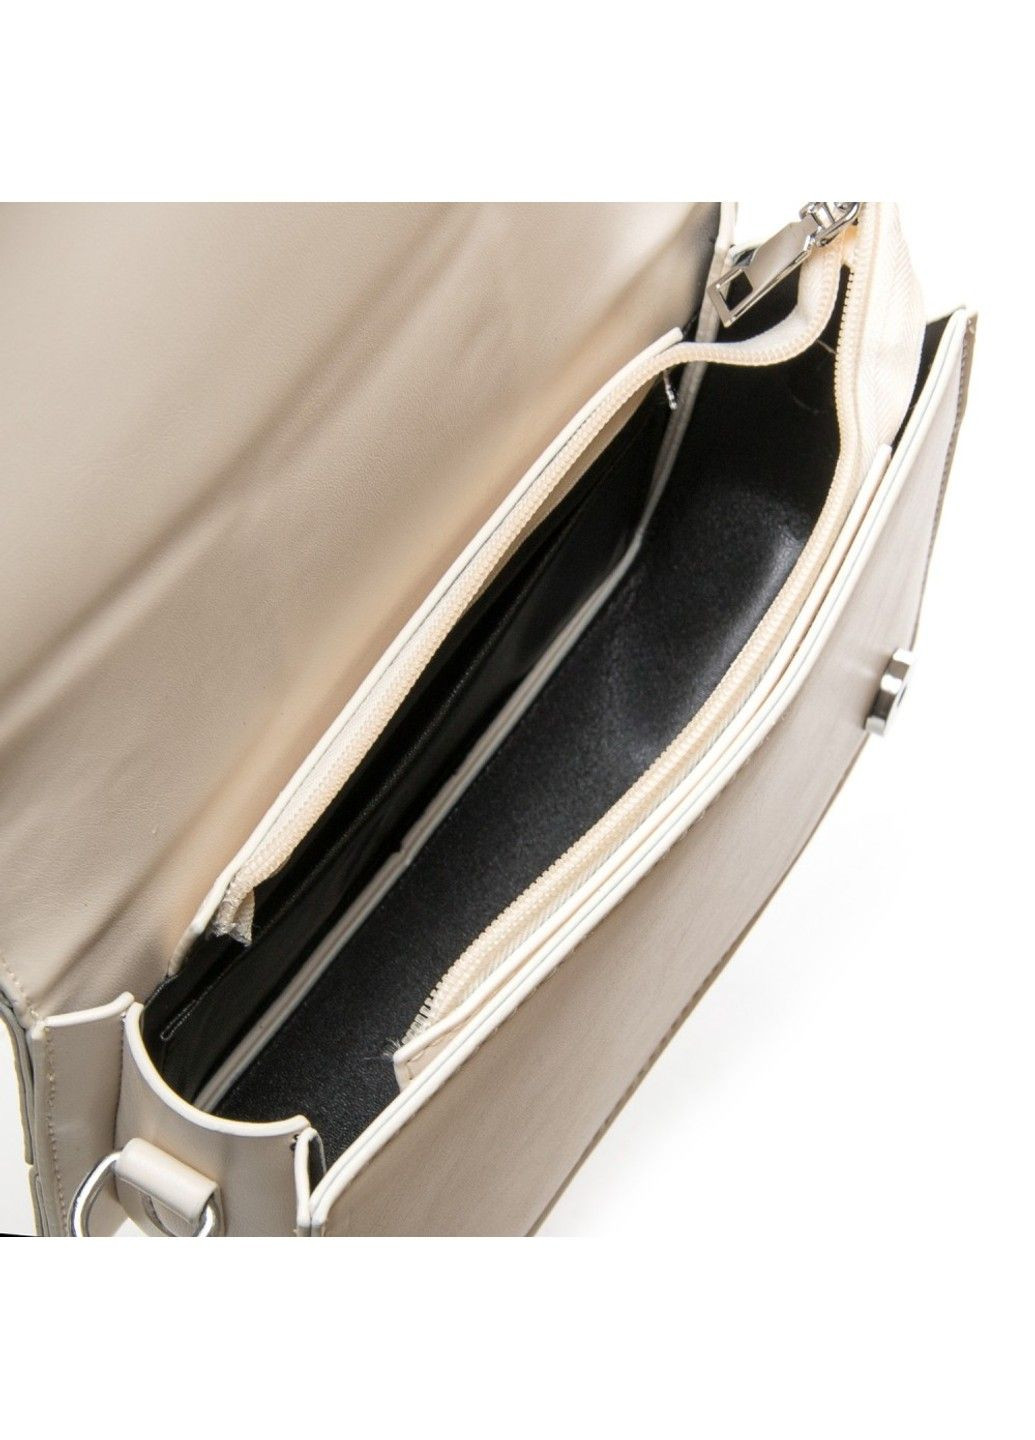 Женская сумочка из кожезаменителя 22 8902 beige Fashion (282820161)